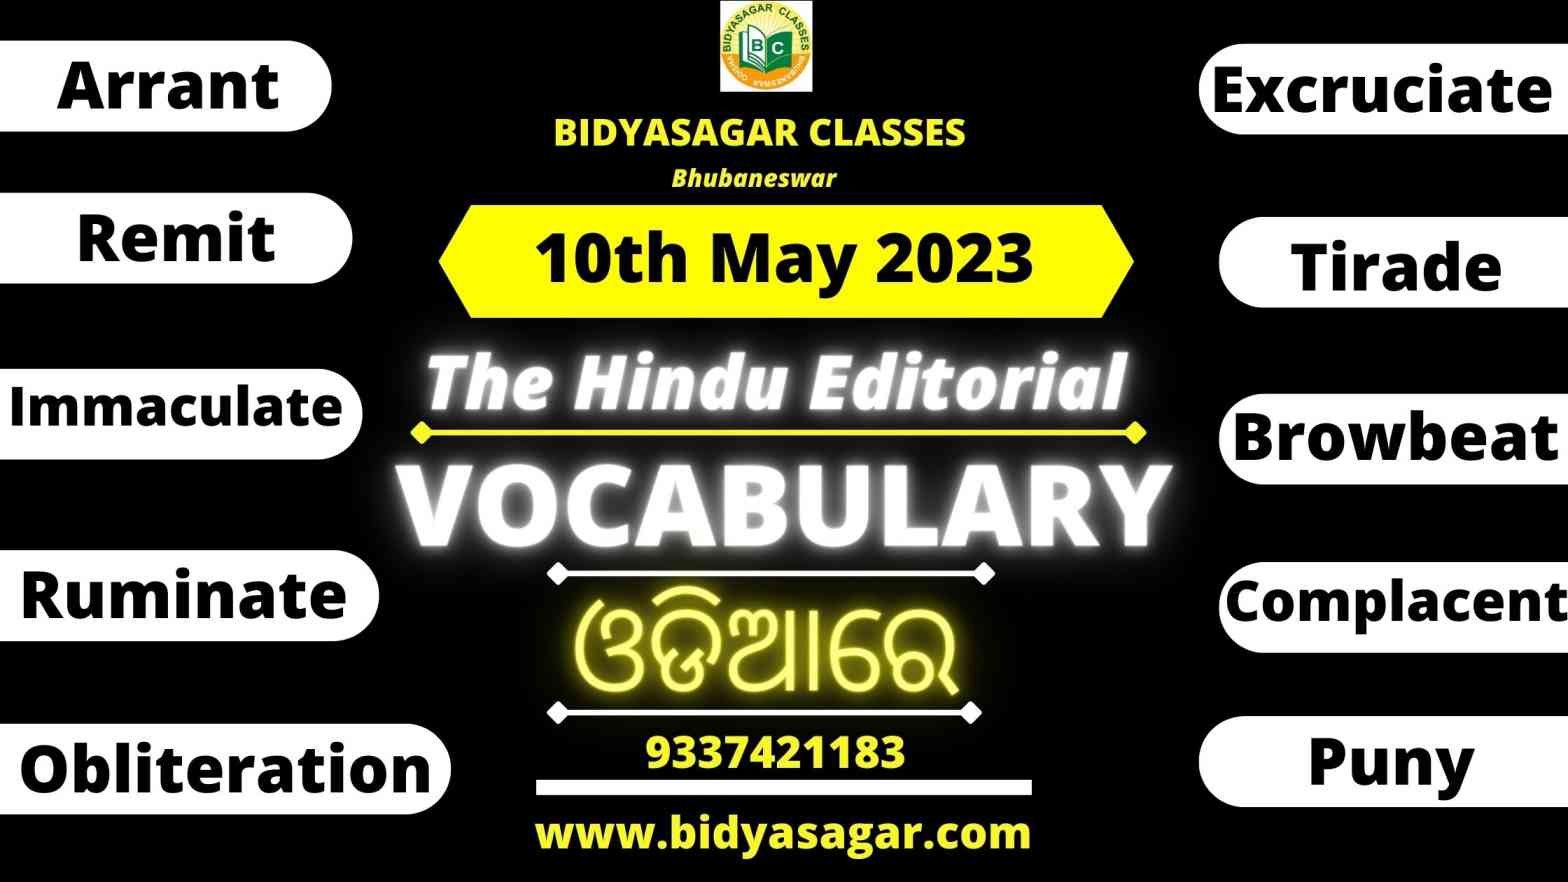 The Hindu Editorial Vocabulary of 10th May 2023